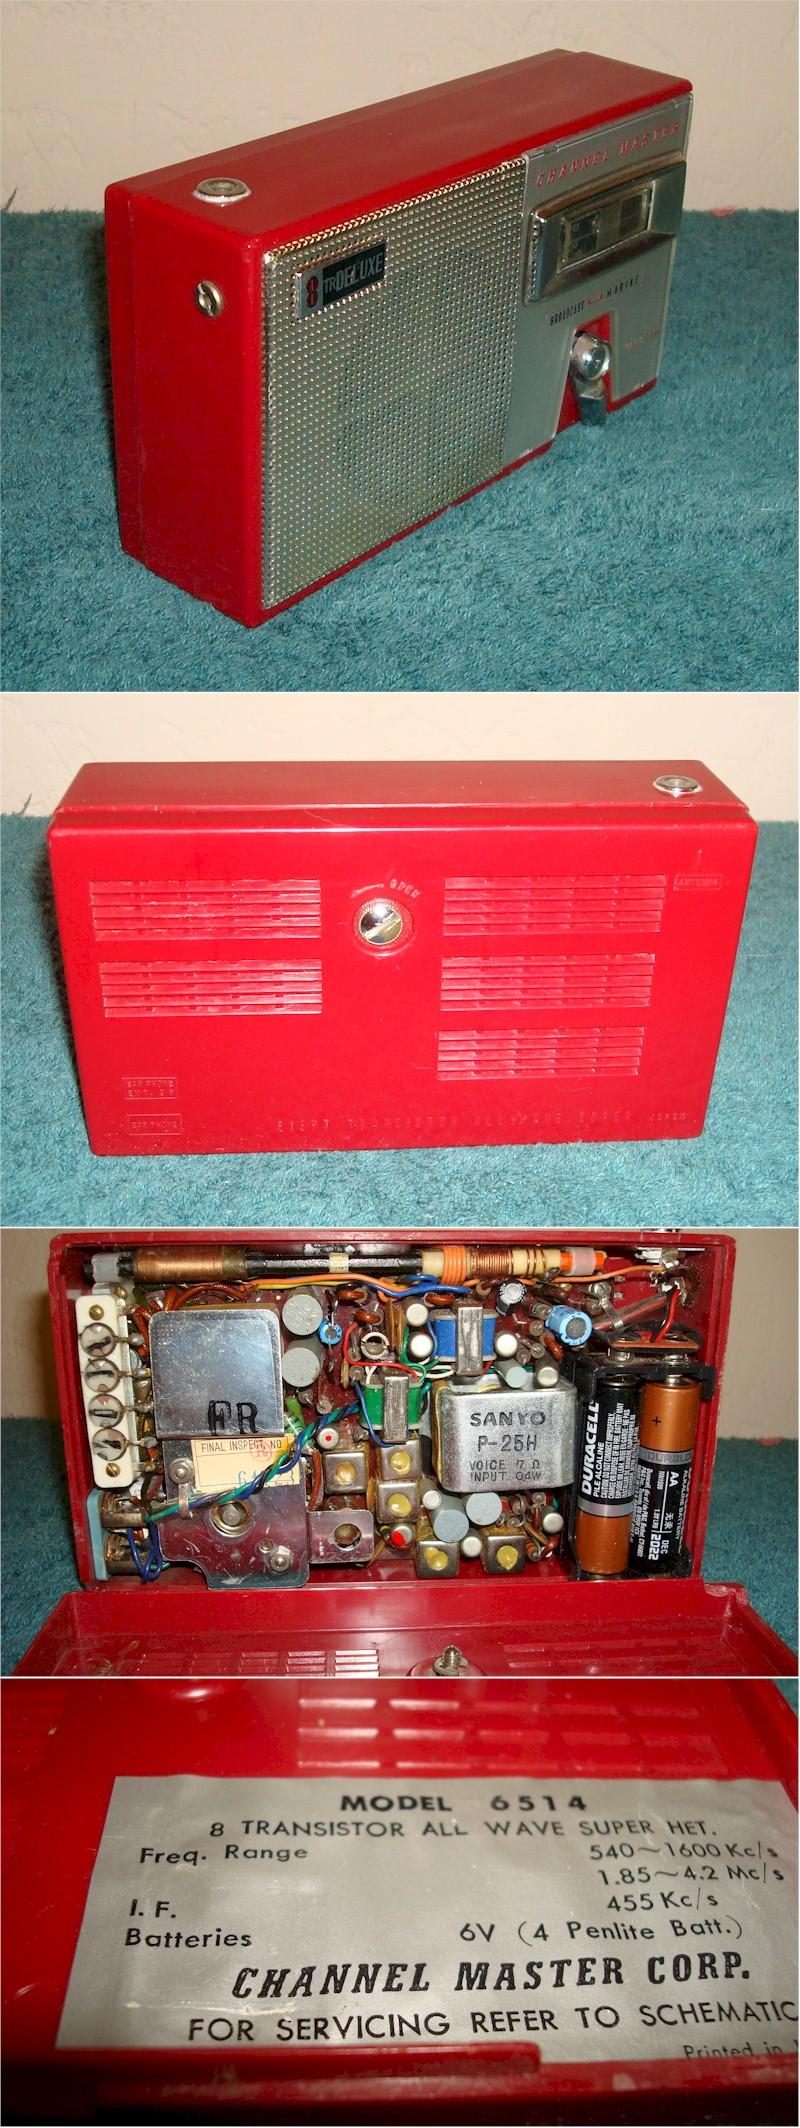 Channel Master 6514 Transistor Radio